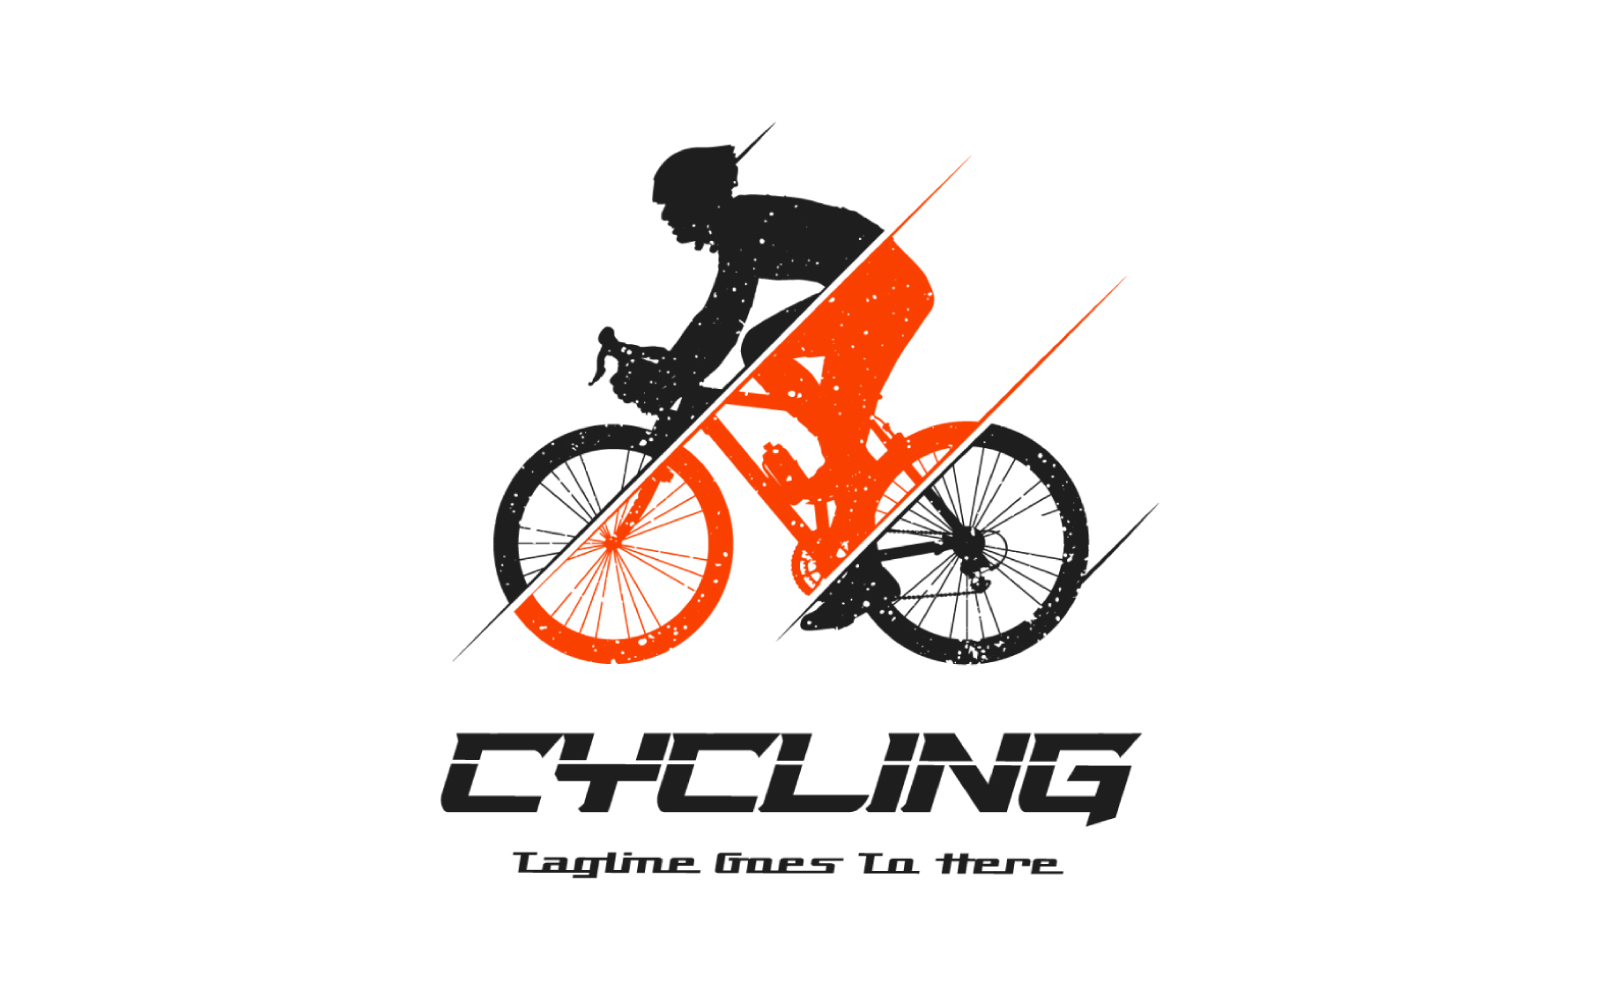 Sport bike logo stock vector. Illustration of elements - 41798653